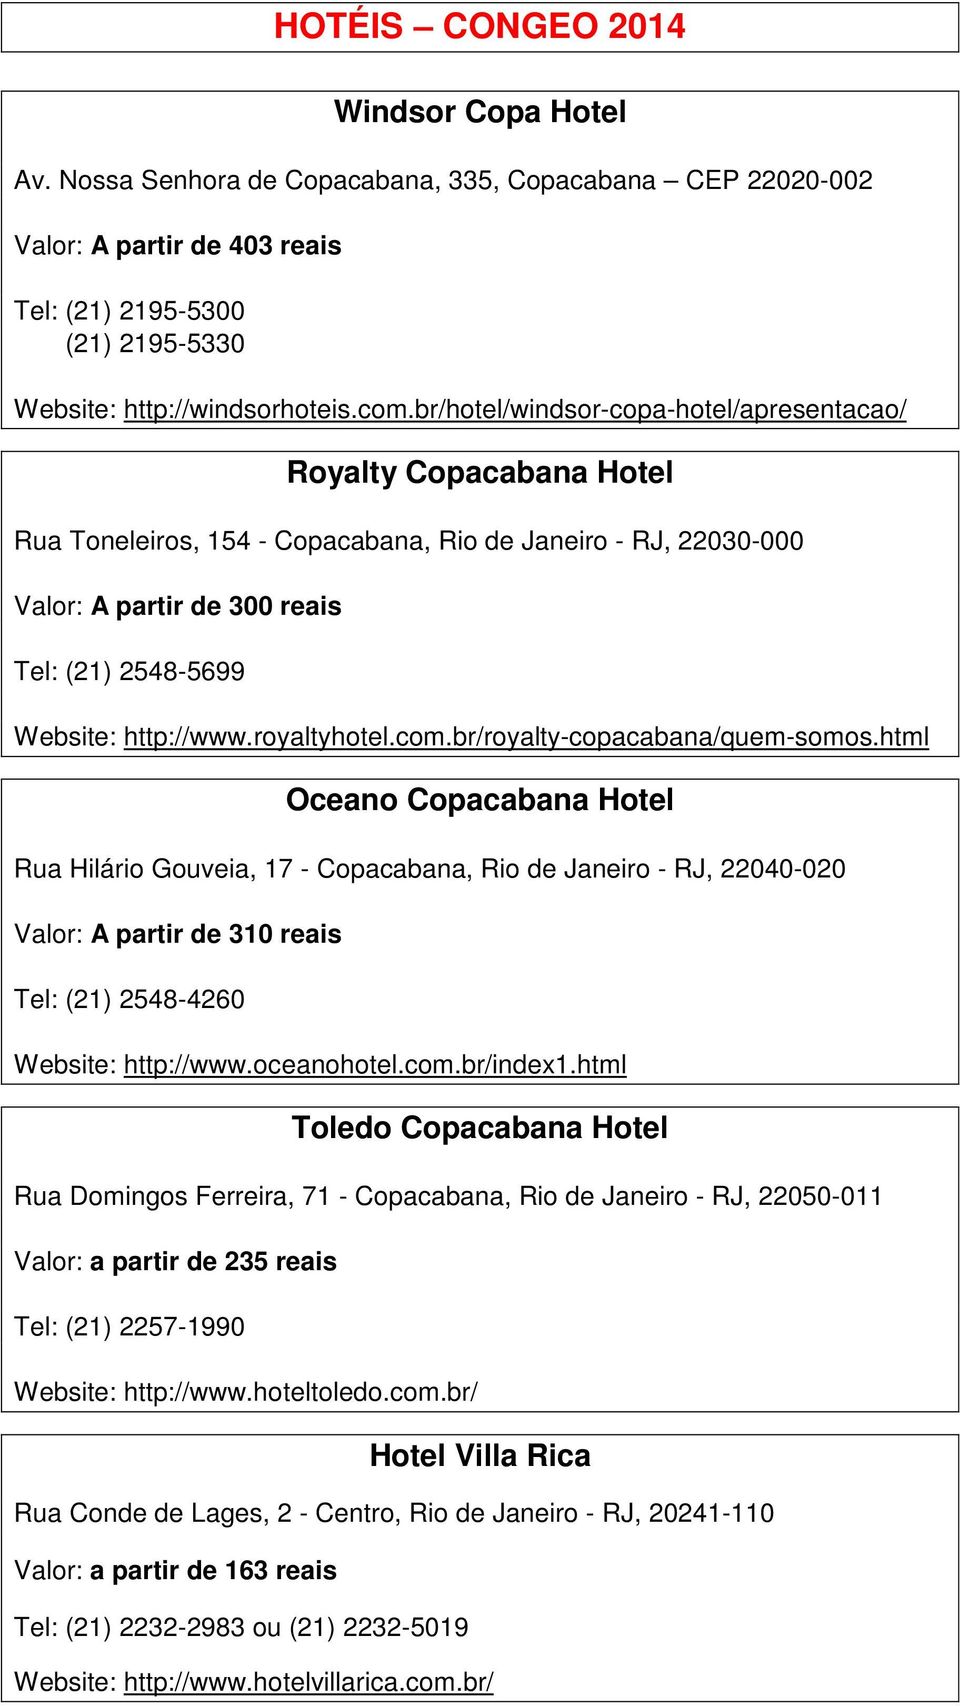 http://www.royaltyhotel.com.br/royalty-copacabana/quem-somos.